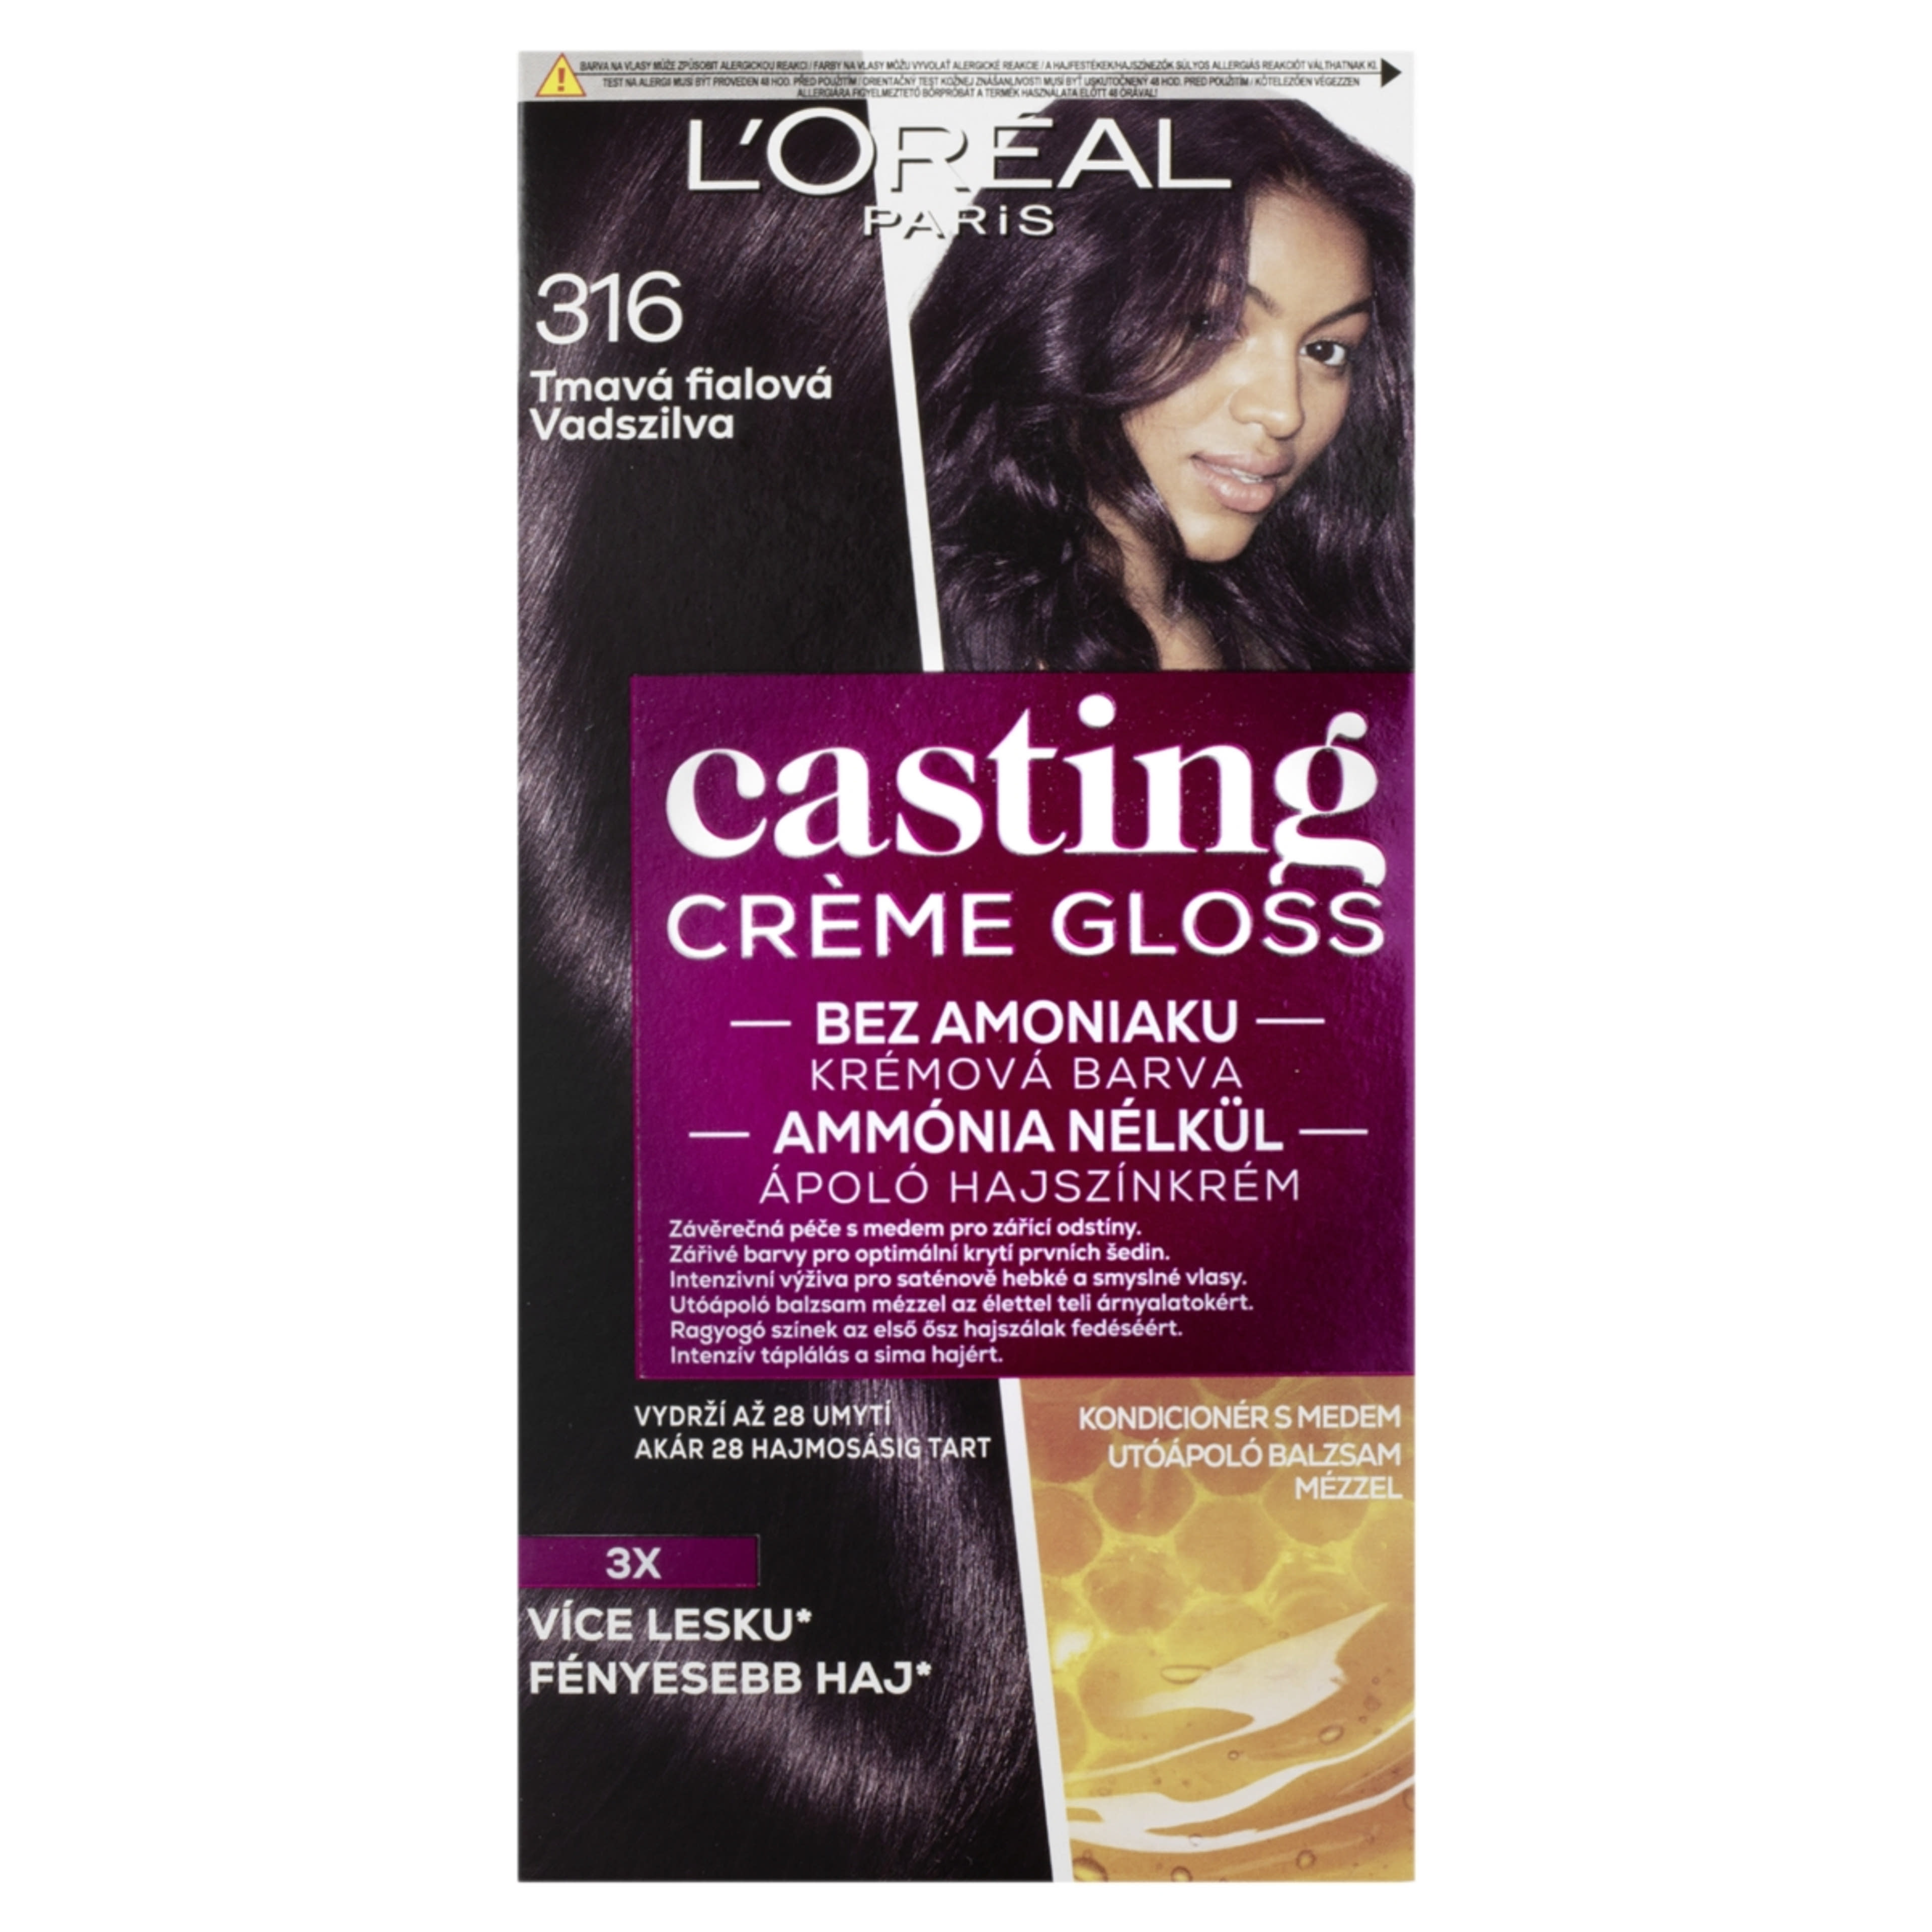 L'Oréal Paris Casting Creme Gloss Hajszínező krém 316 Vadszilva - 1 db